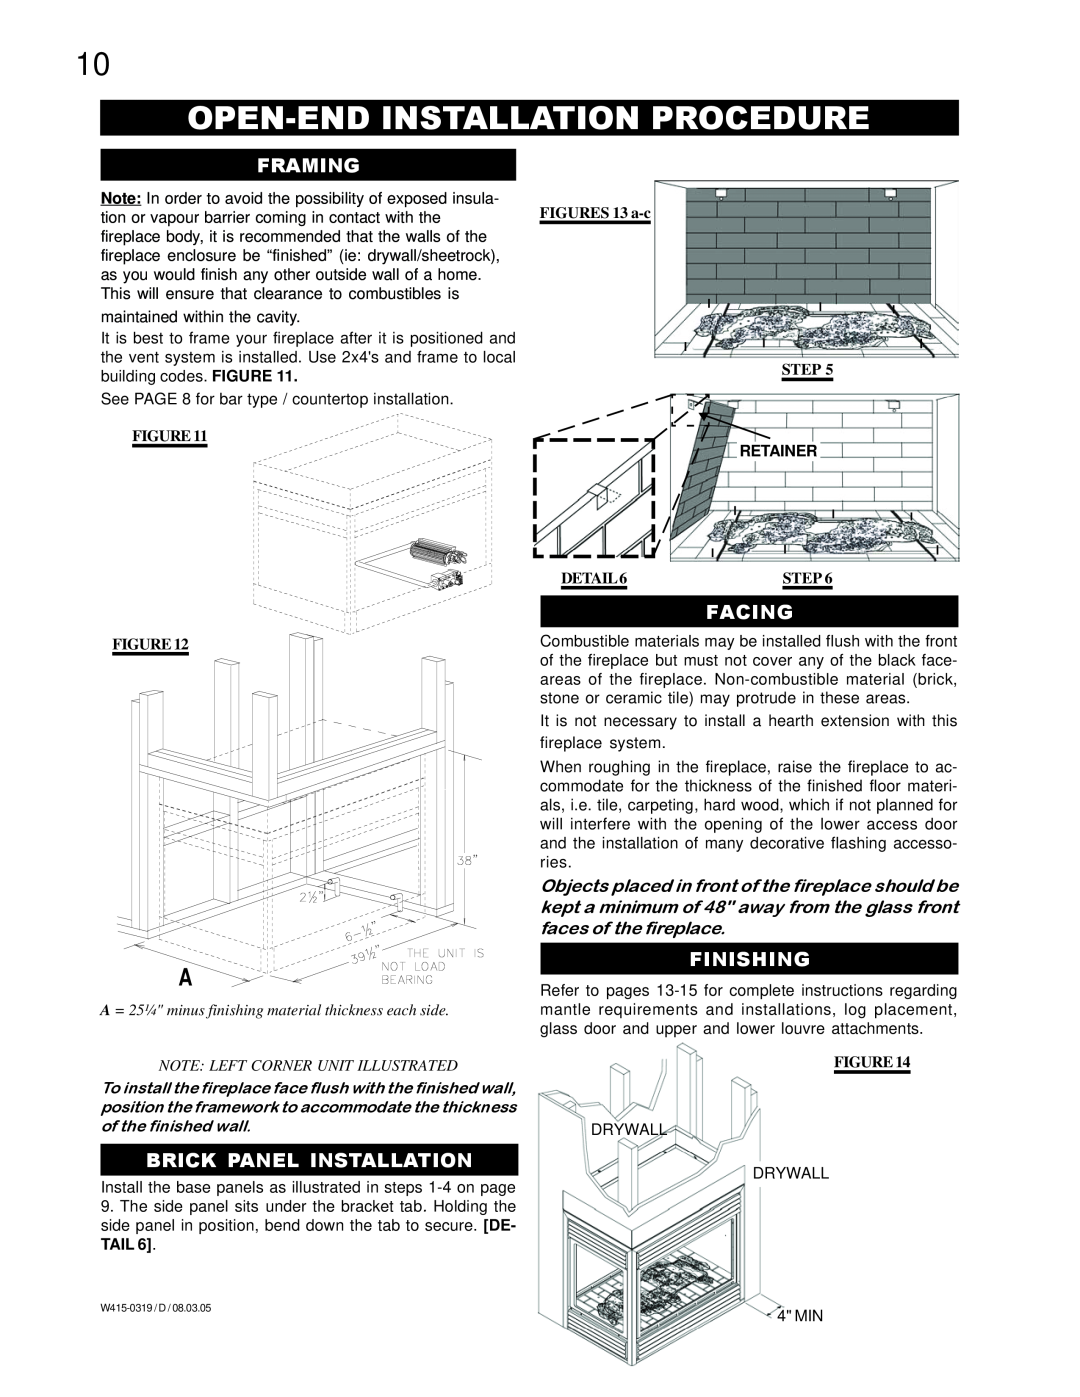 Napoleon Fireplaces GVF40P Open-Endinstallation Procedure, Framing, Brick Panel Installation, Facing, Finishing, Retainer 